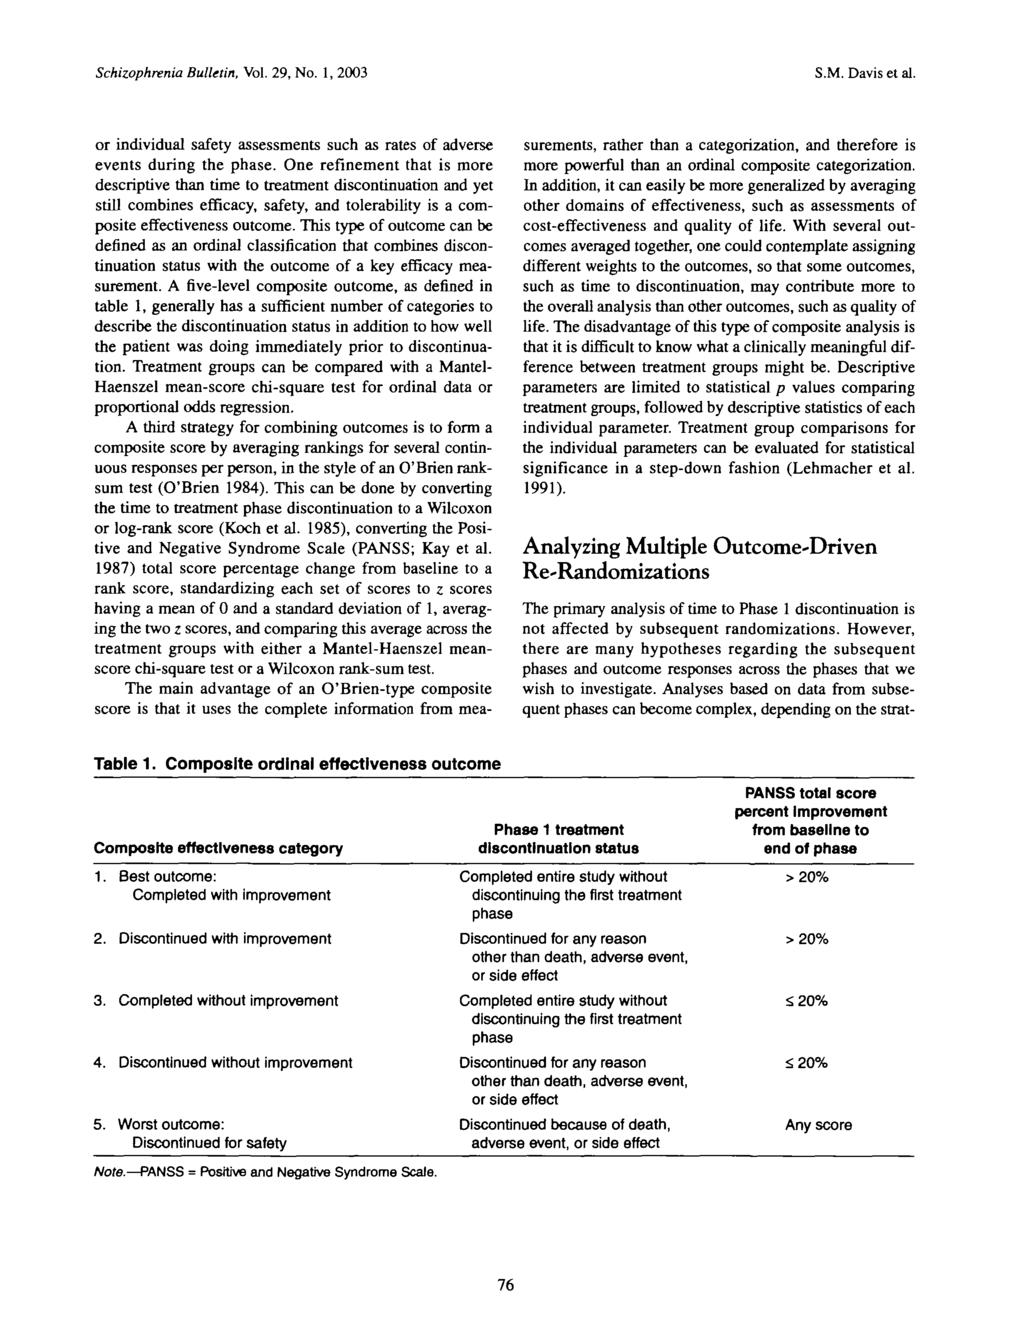 Schizophrenia Bulletin, Vol. 29, No. 1, 2003 S.M. Davis et al. Table 1. Composite ordinal effectiveness outcome Composite effectiveness category 1. Best outcome: Completed with improvement 2.